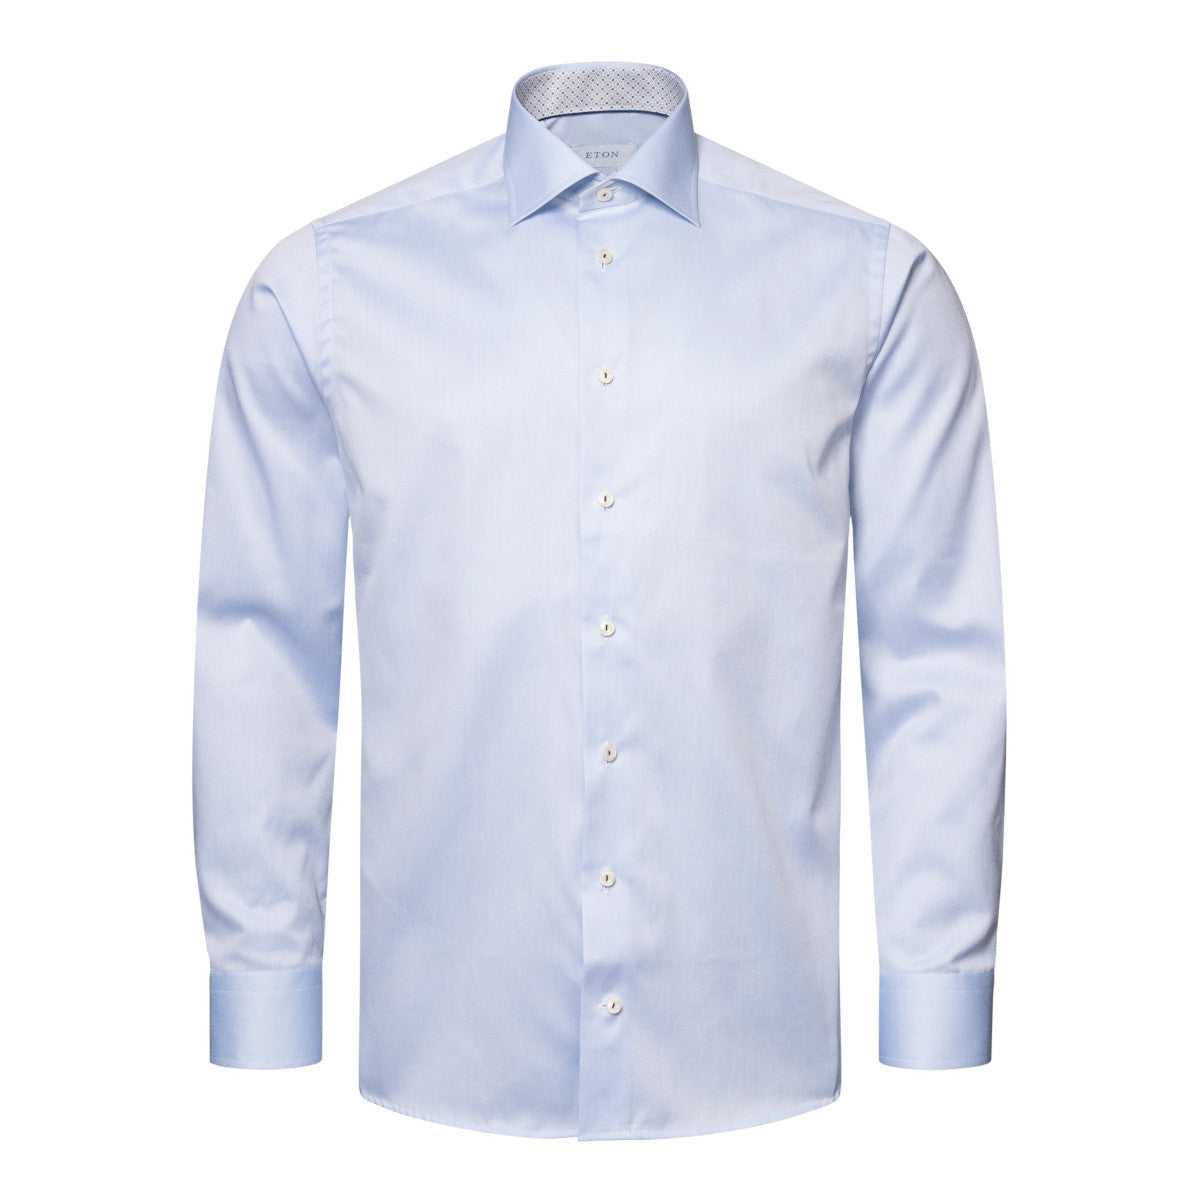 Eton Comtemporary Geometric Effect Twill Shirt 21 Light Blue